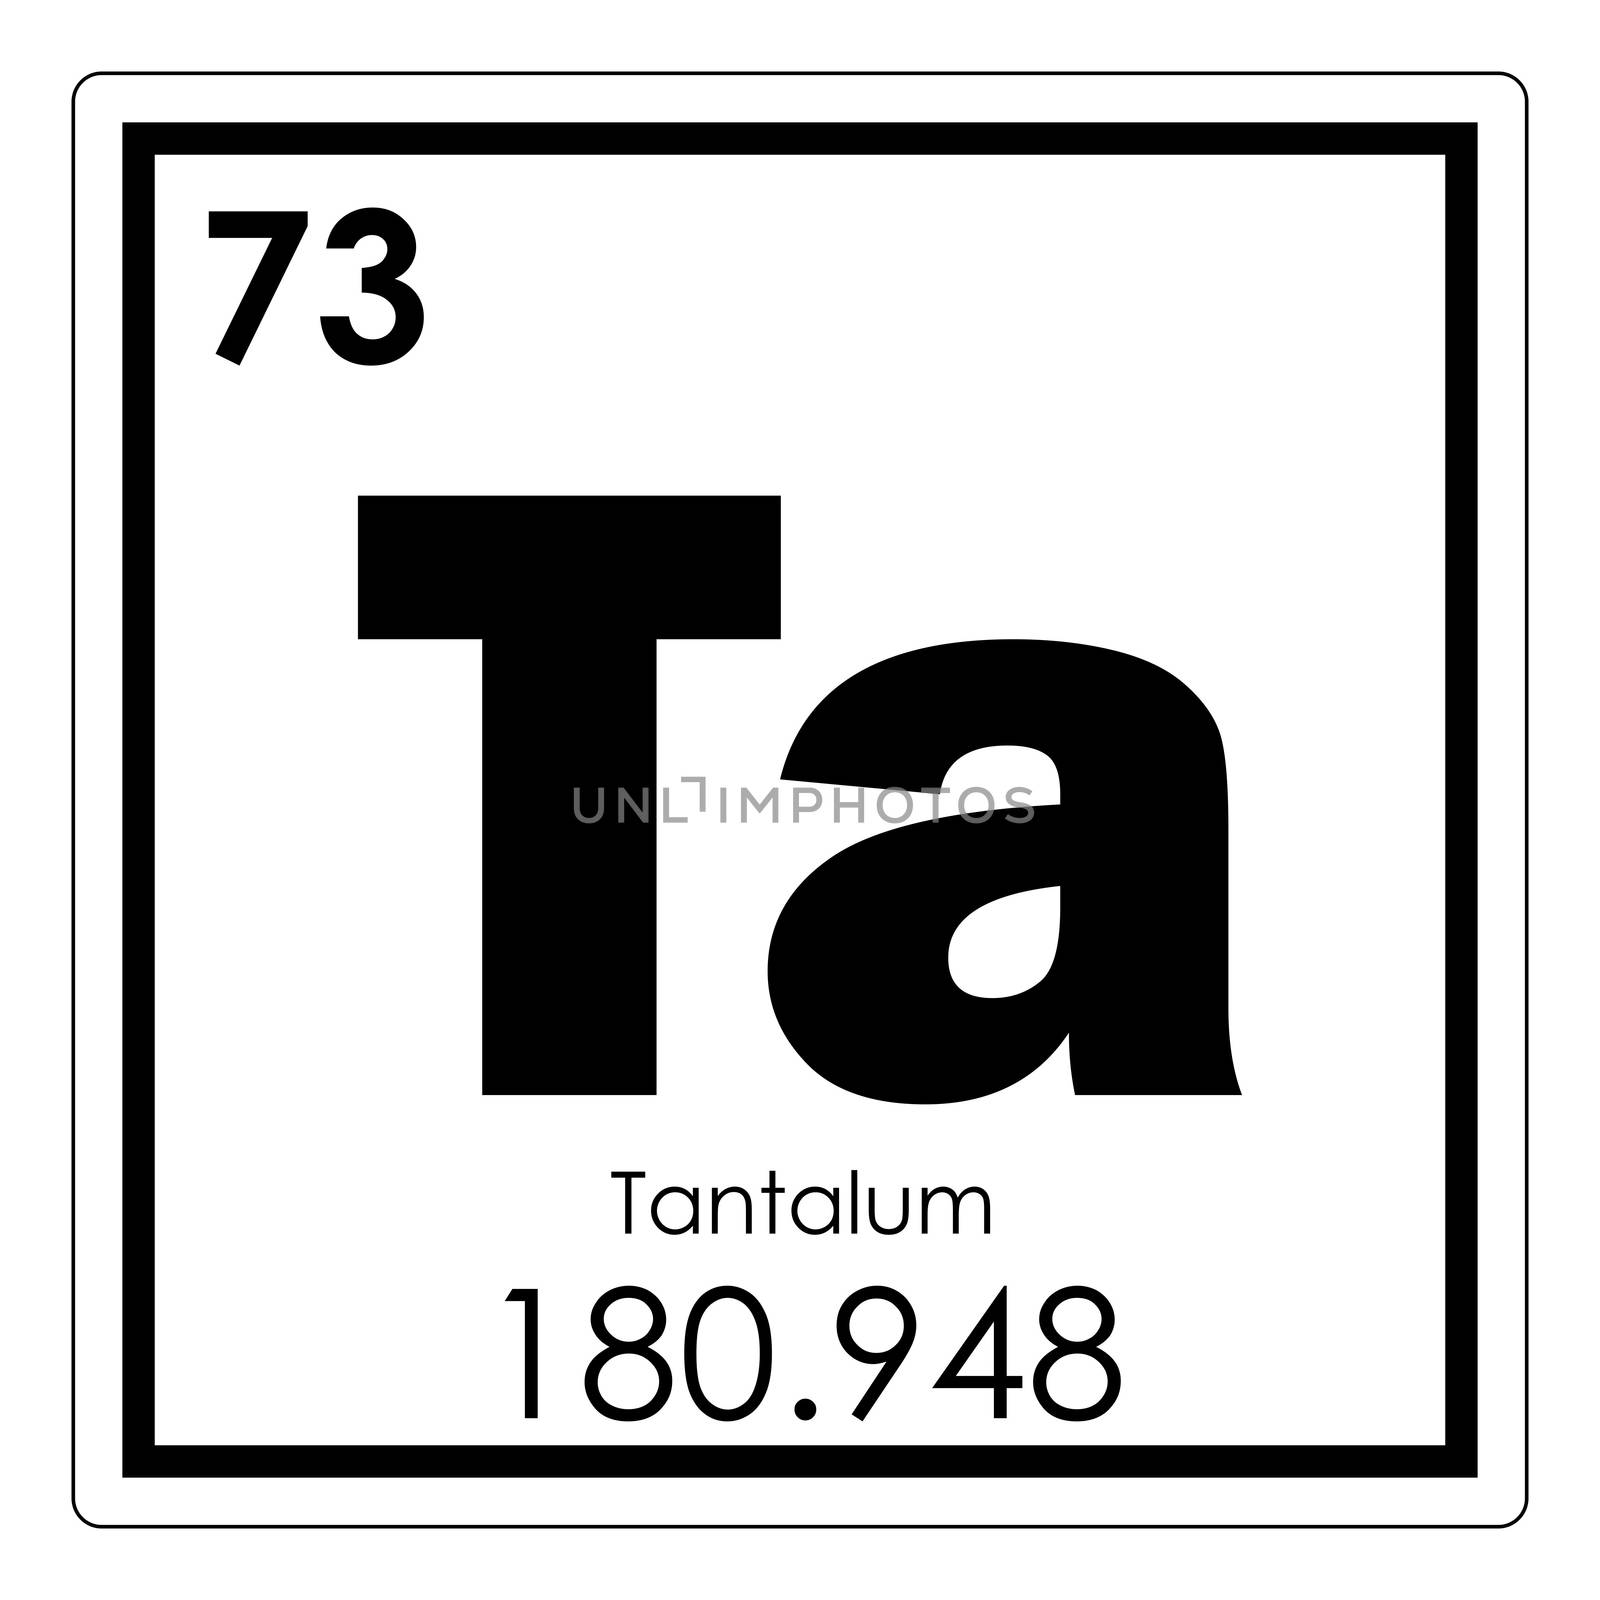 Tantalum chemical element by tony4urban